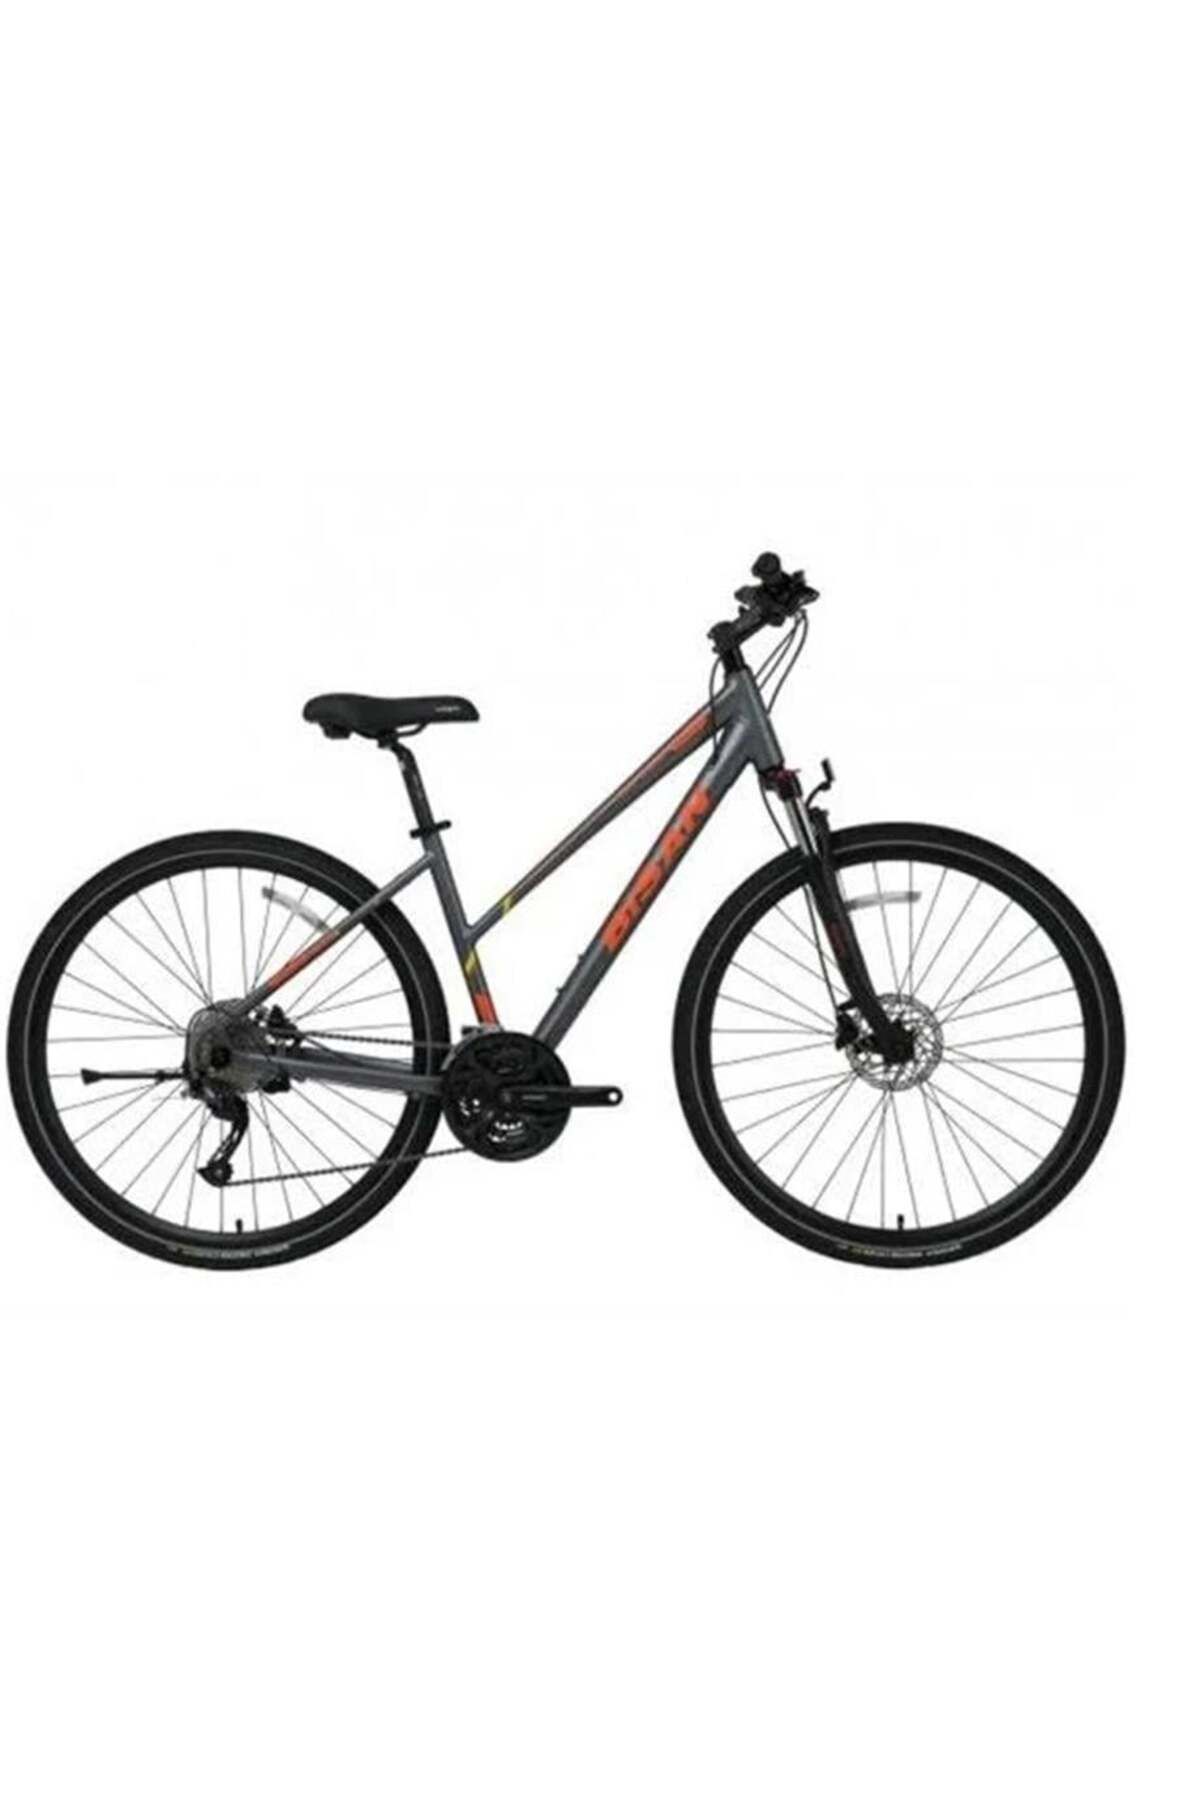 Bisan Trx 8300 Kadın Şehir Bisikleti 45cm Md 28 Jant 24 Vites Tourney Metalik Gri Turuncu